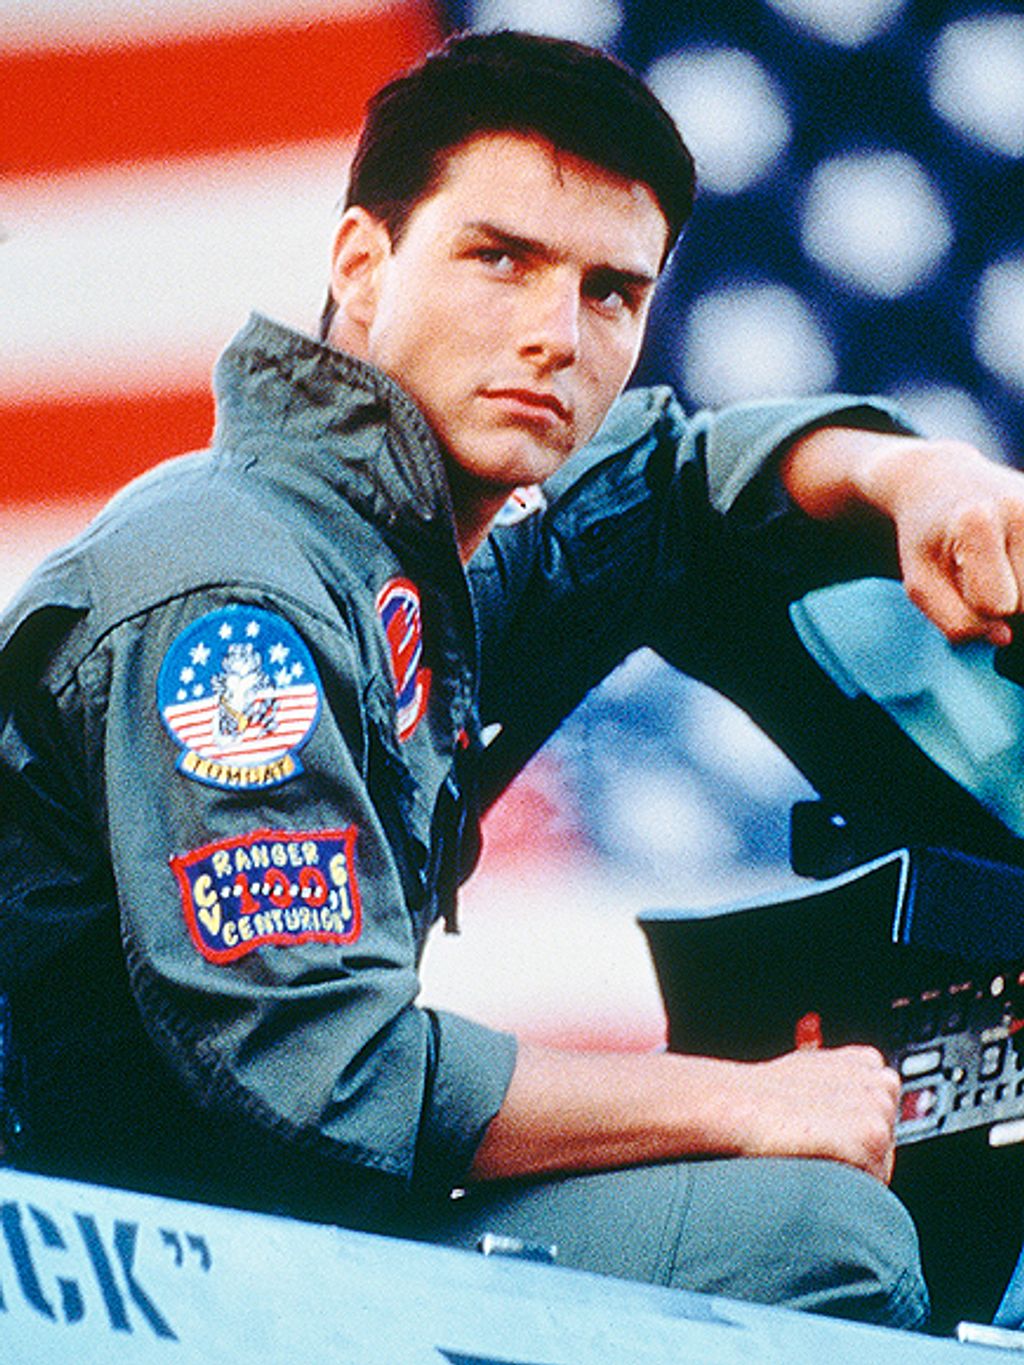 1990: Tom Cruise 